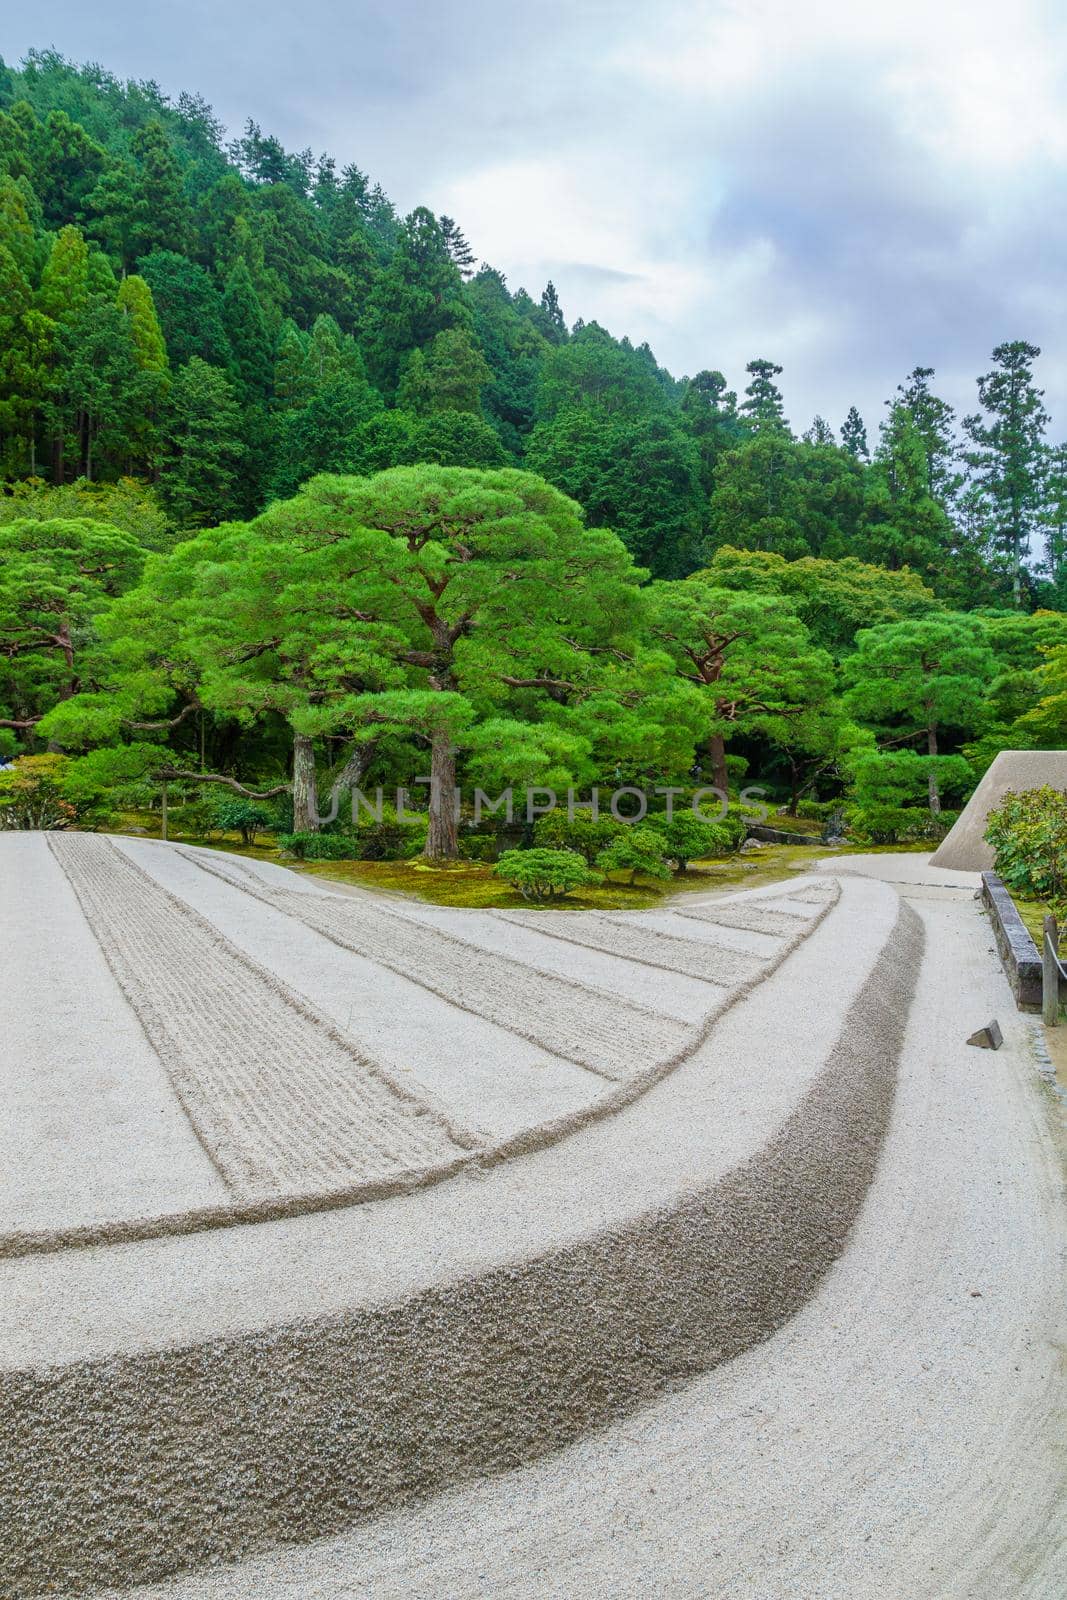 Rock Garden of the Higashiyama Jisho-ji Temple, Kyoto by RnDmS